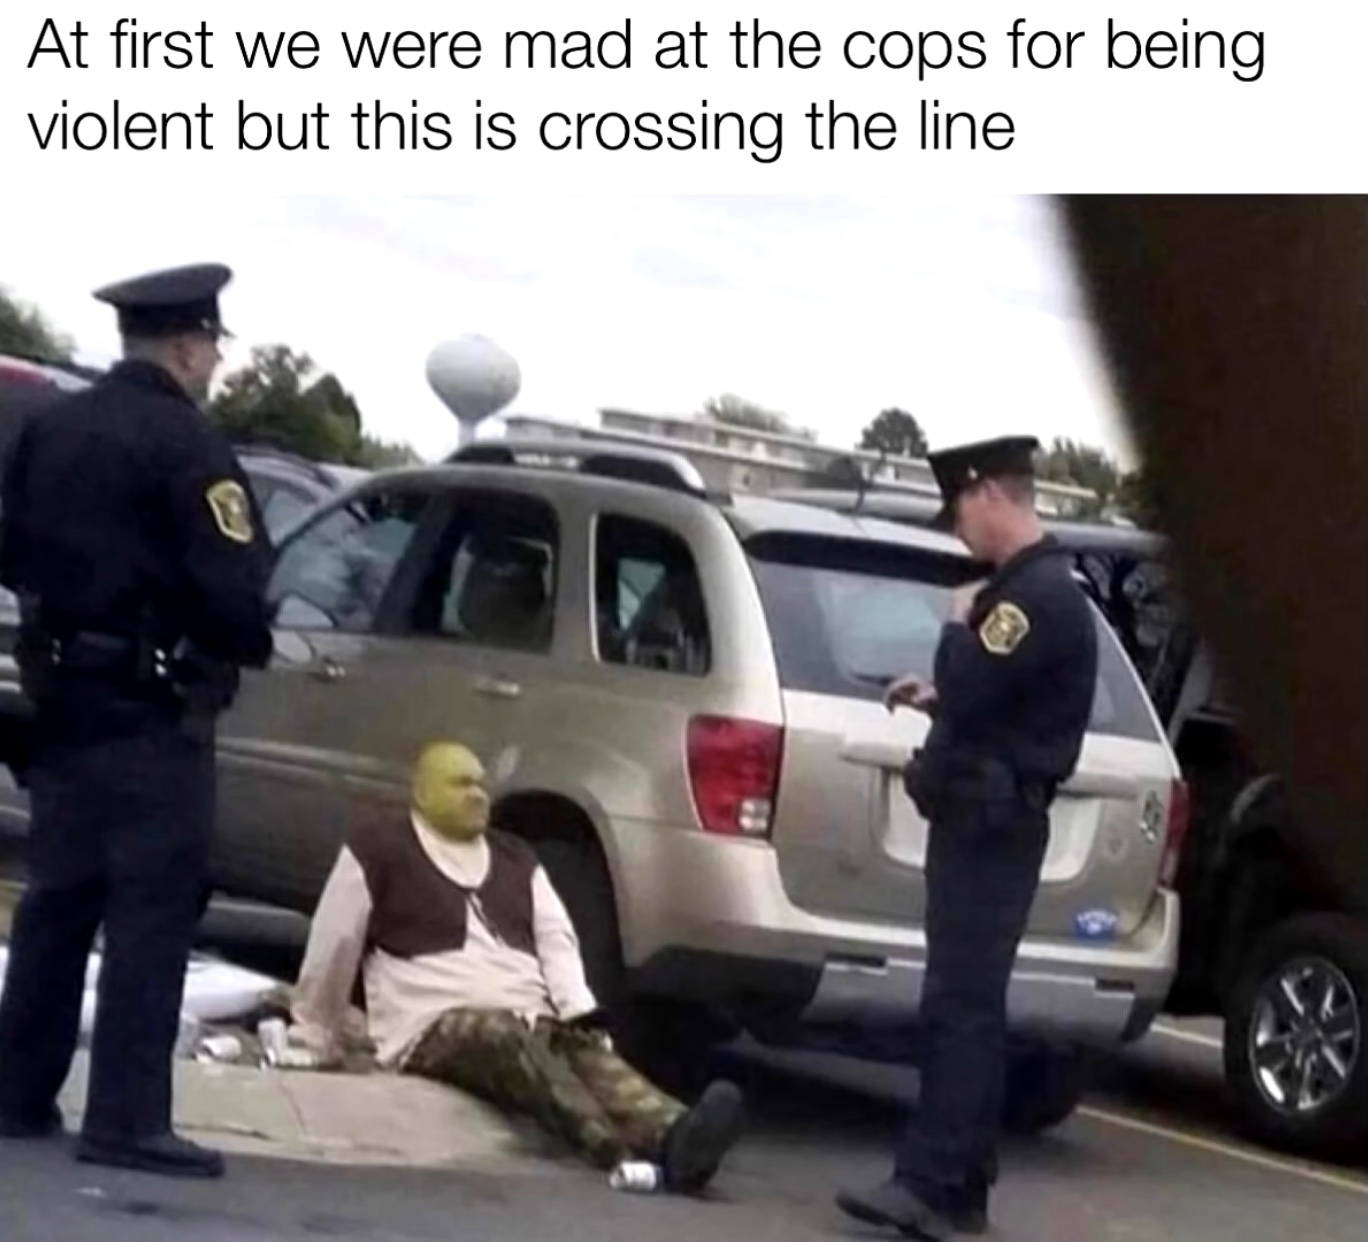 now these cops goin too far - meme